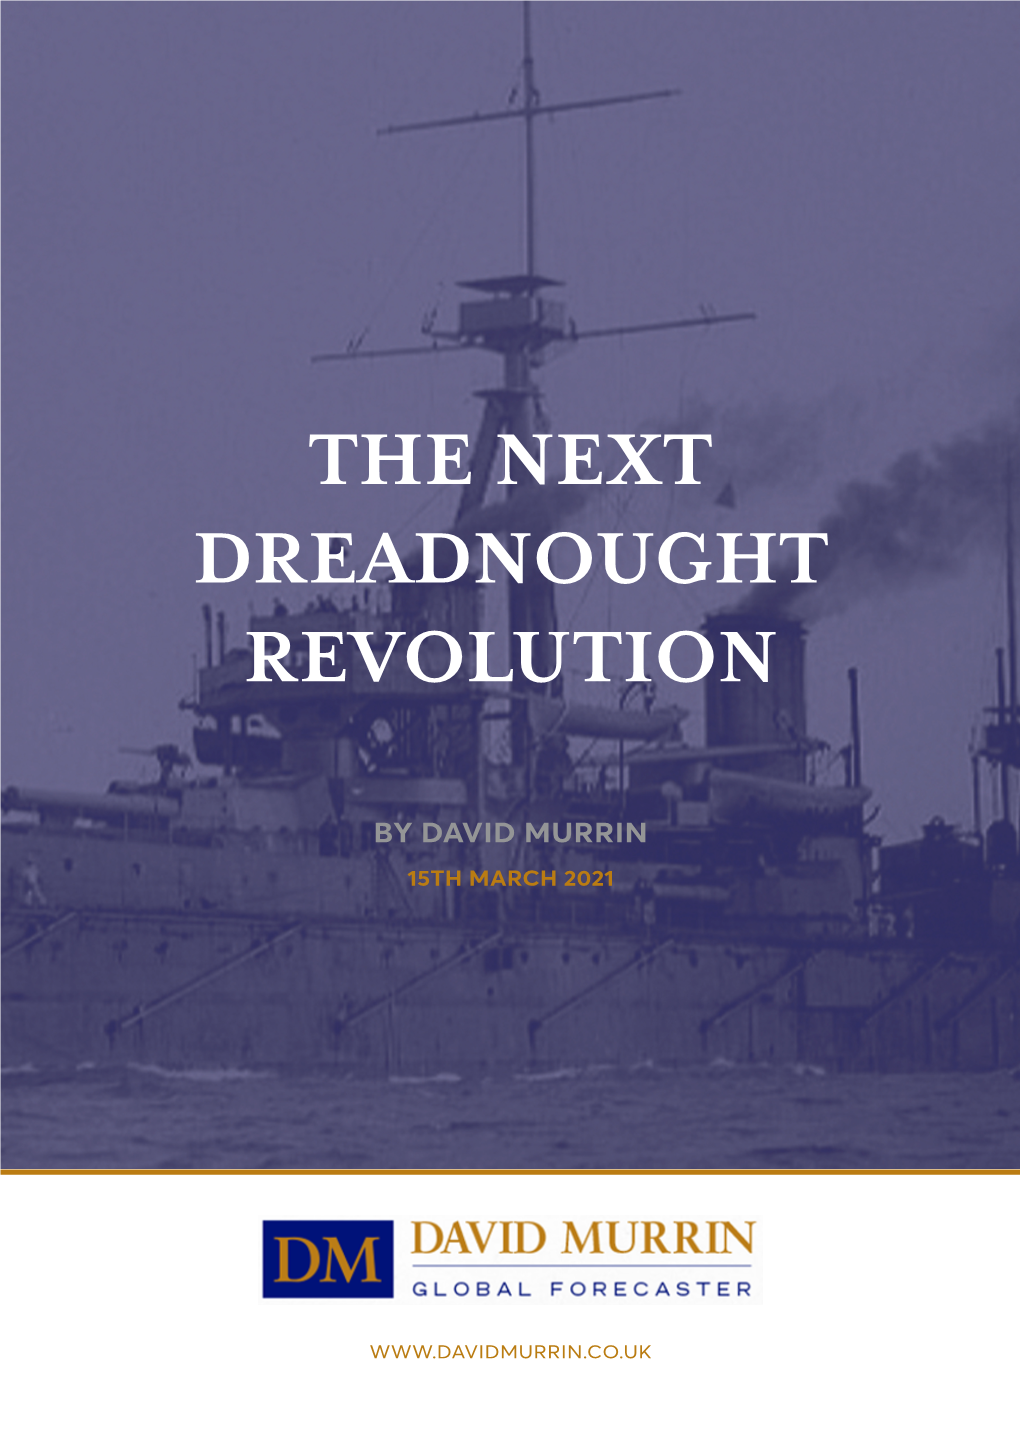 The Next Dreadnought Revolution